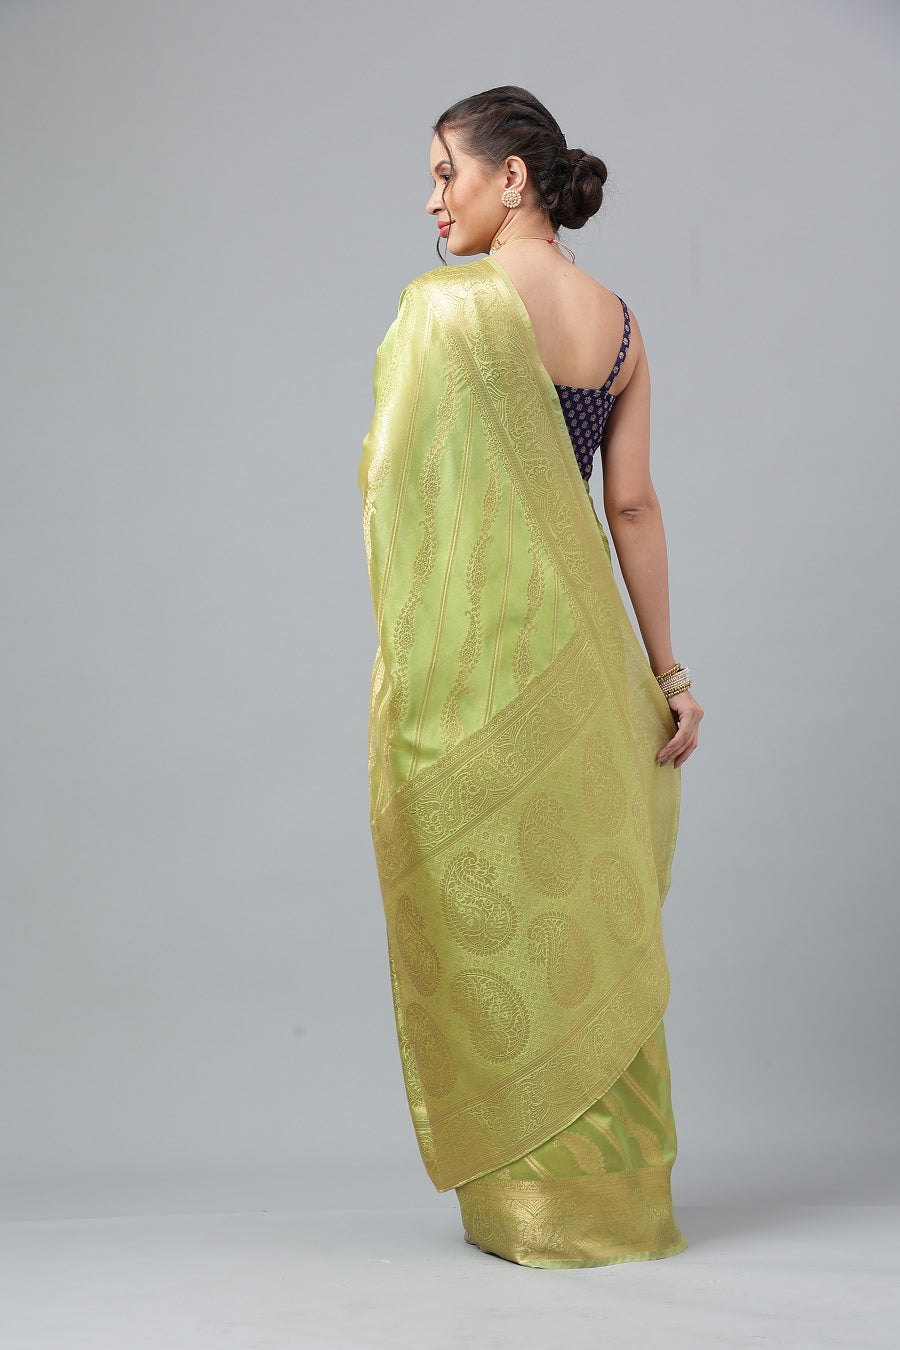 PartyWear Green Woven Gold Jari Organja Silk Kanjivaram Saree With Heavy Brocade Blouse